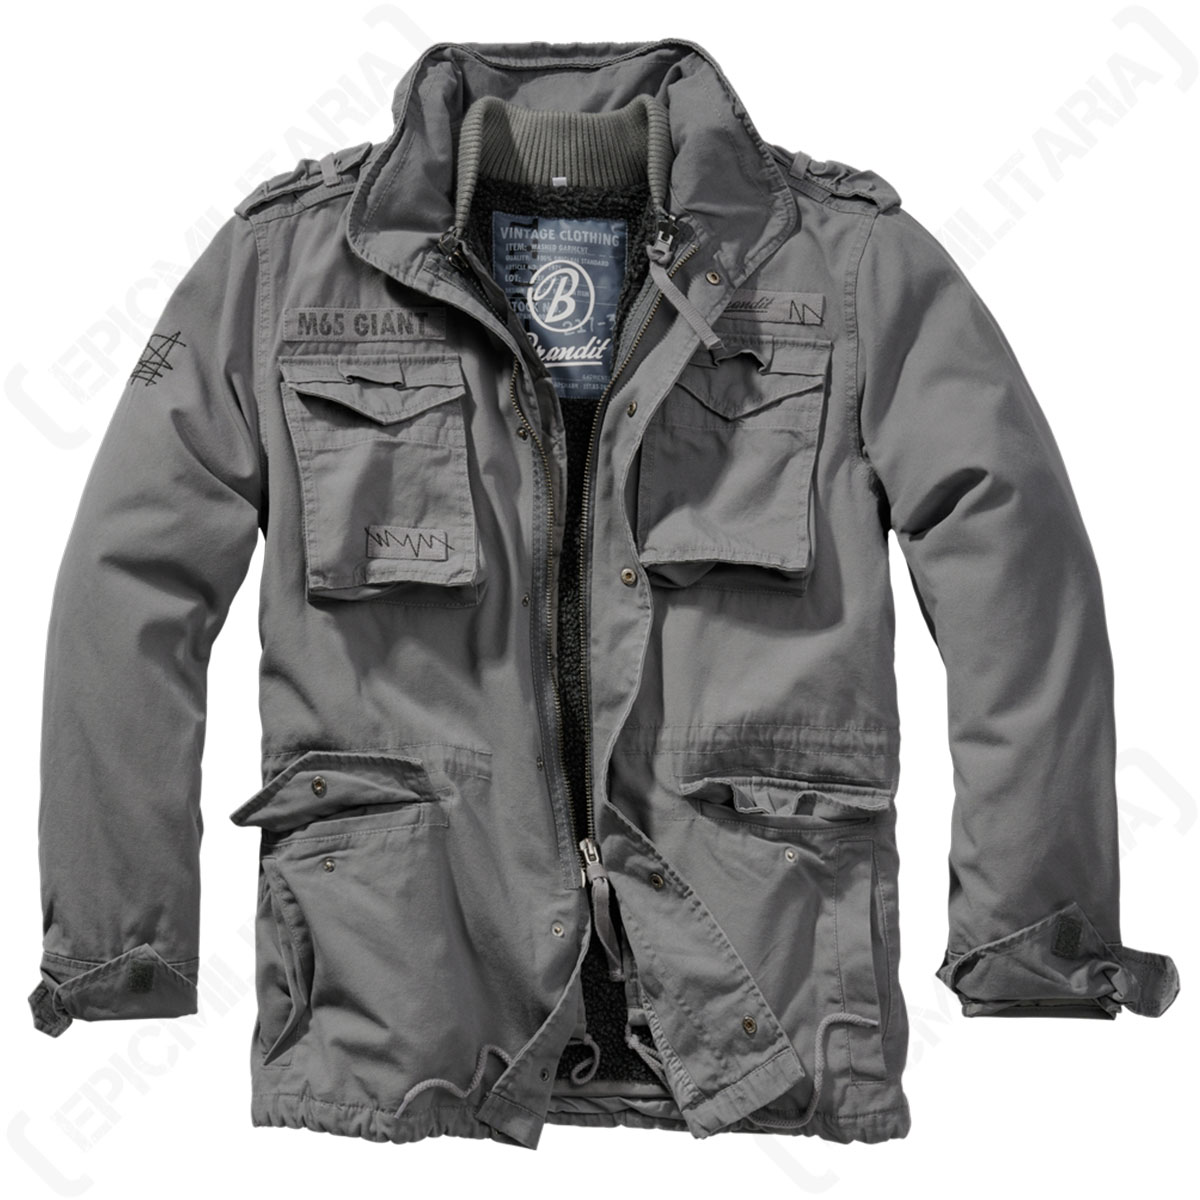 Brandit M65 Giant Jacket - Militaria Charcoal - Grey Epic